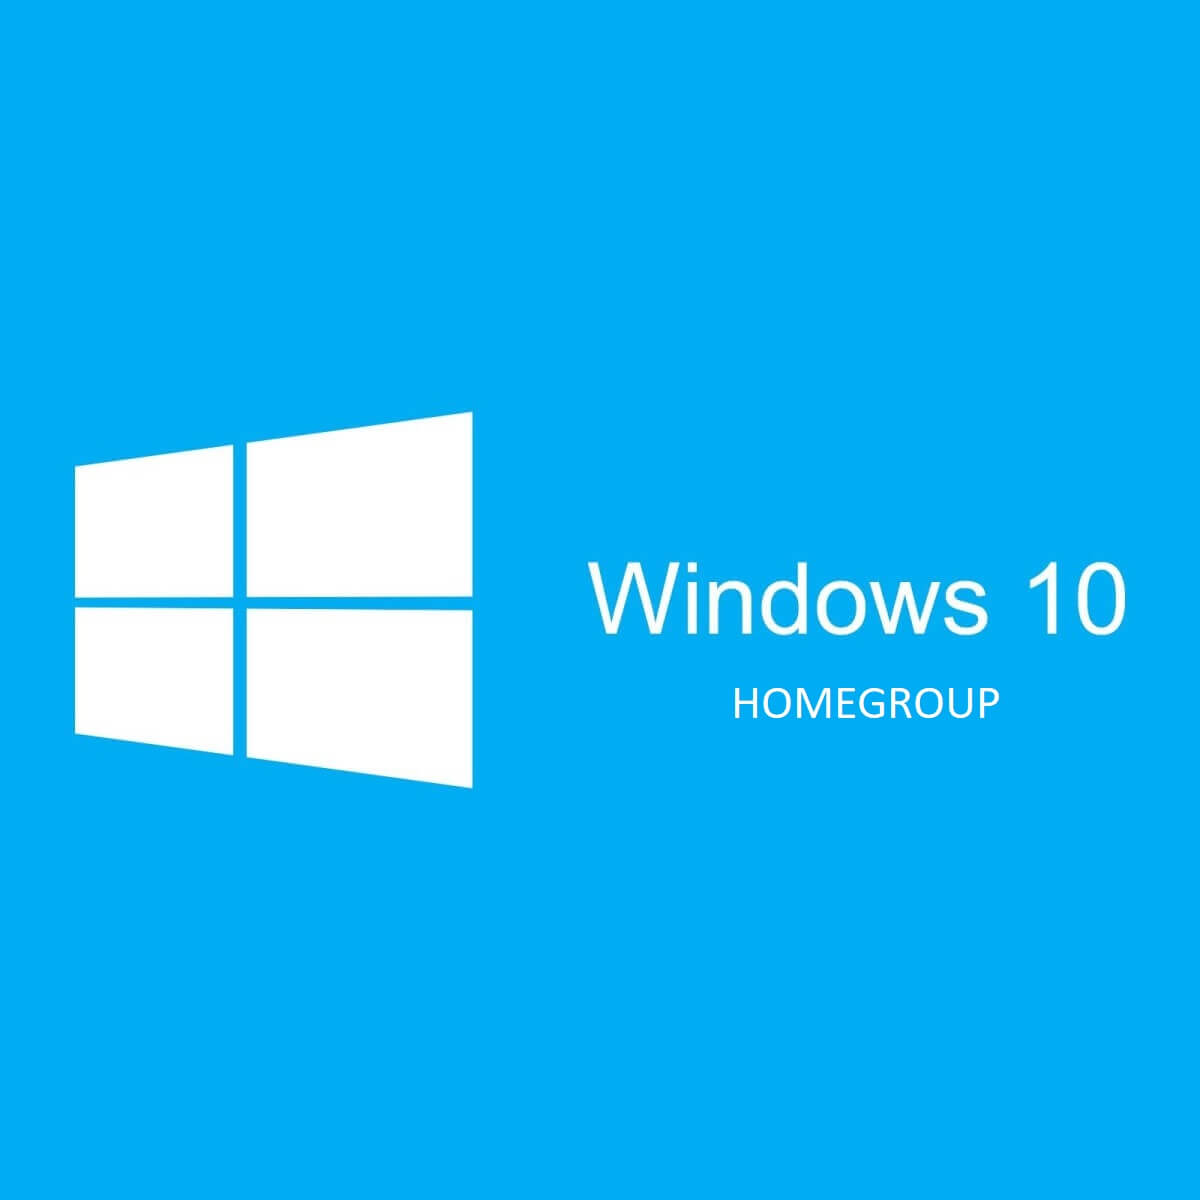 Windows 10 homegroup error